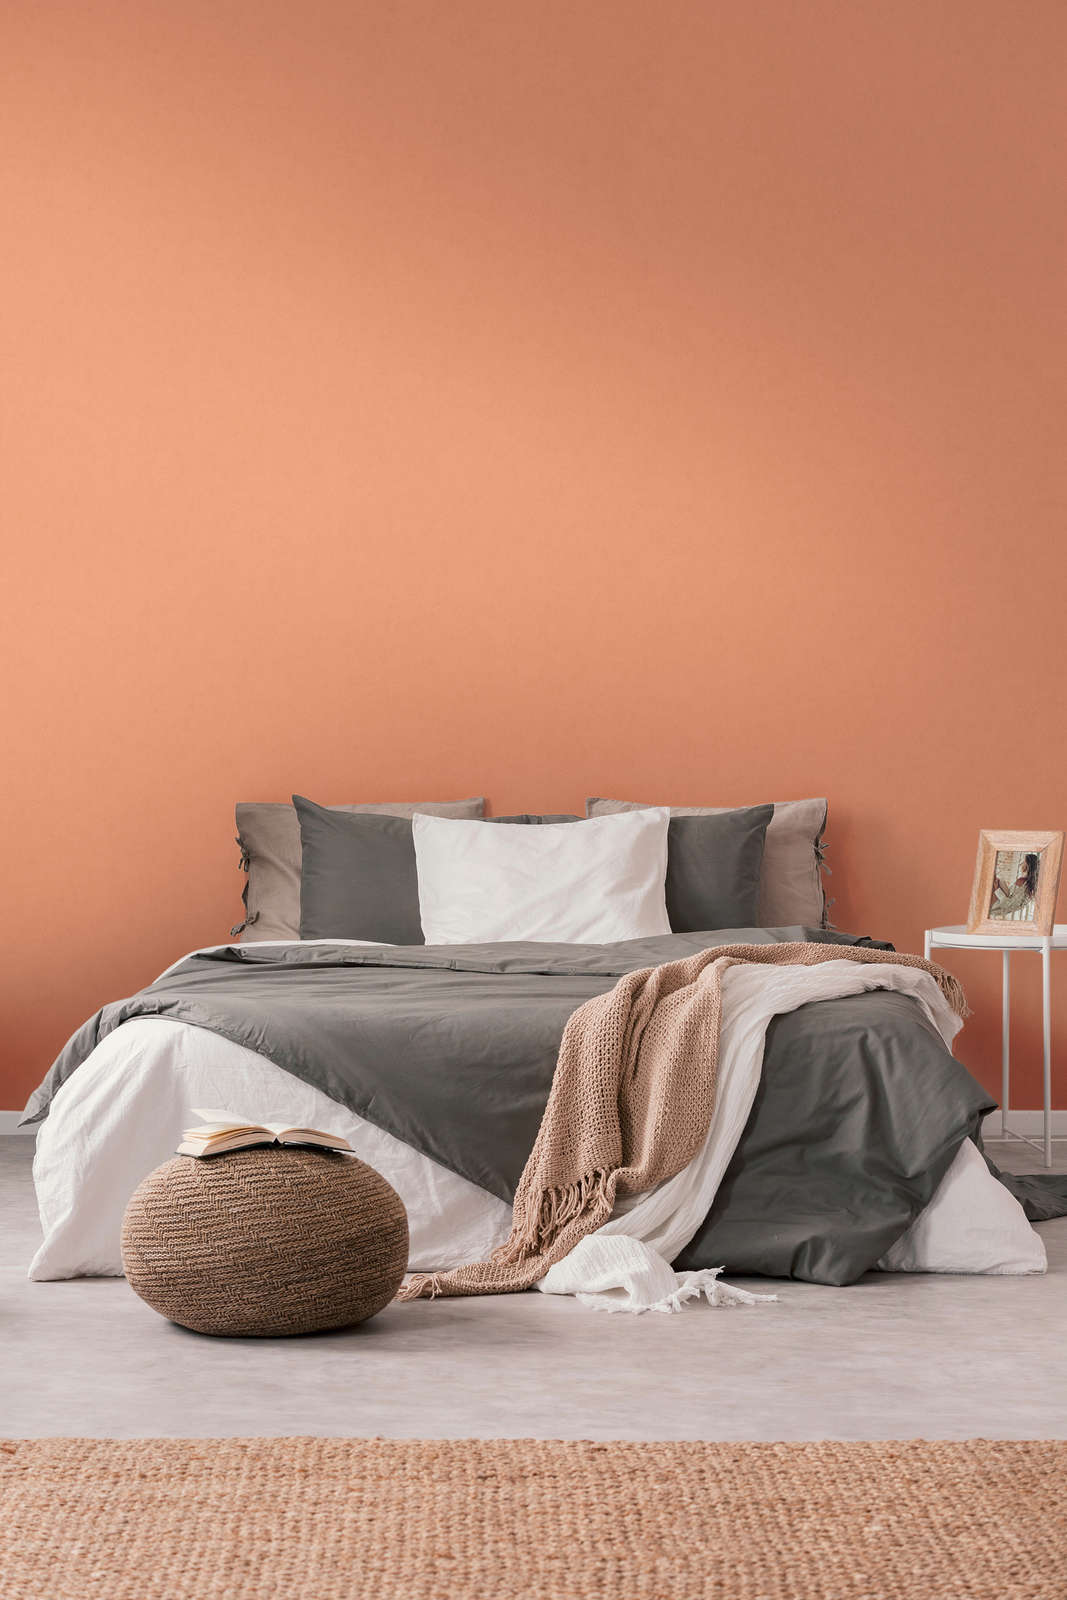             Plain plain wallpaper - orange
        